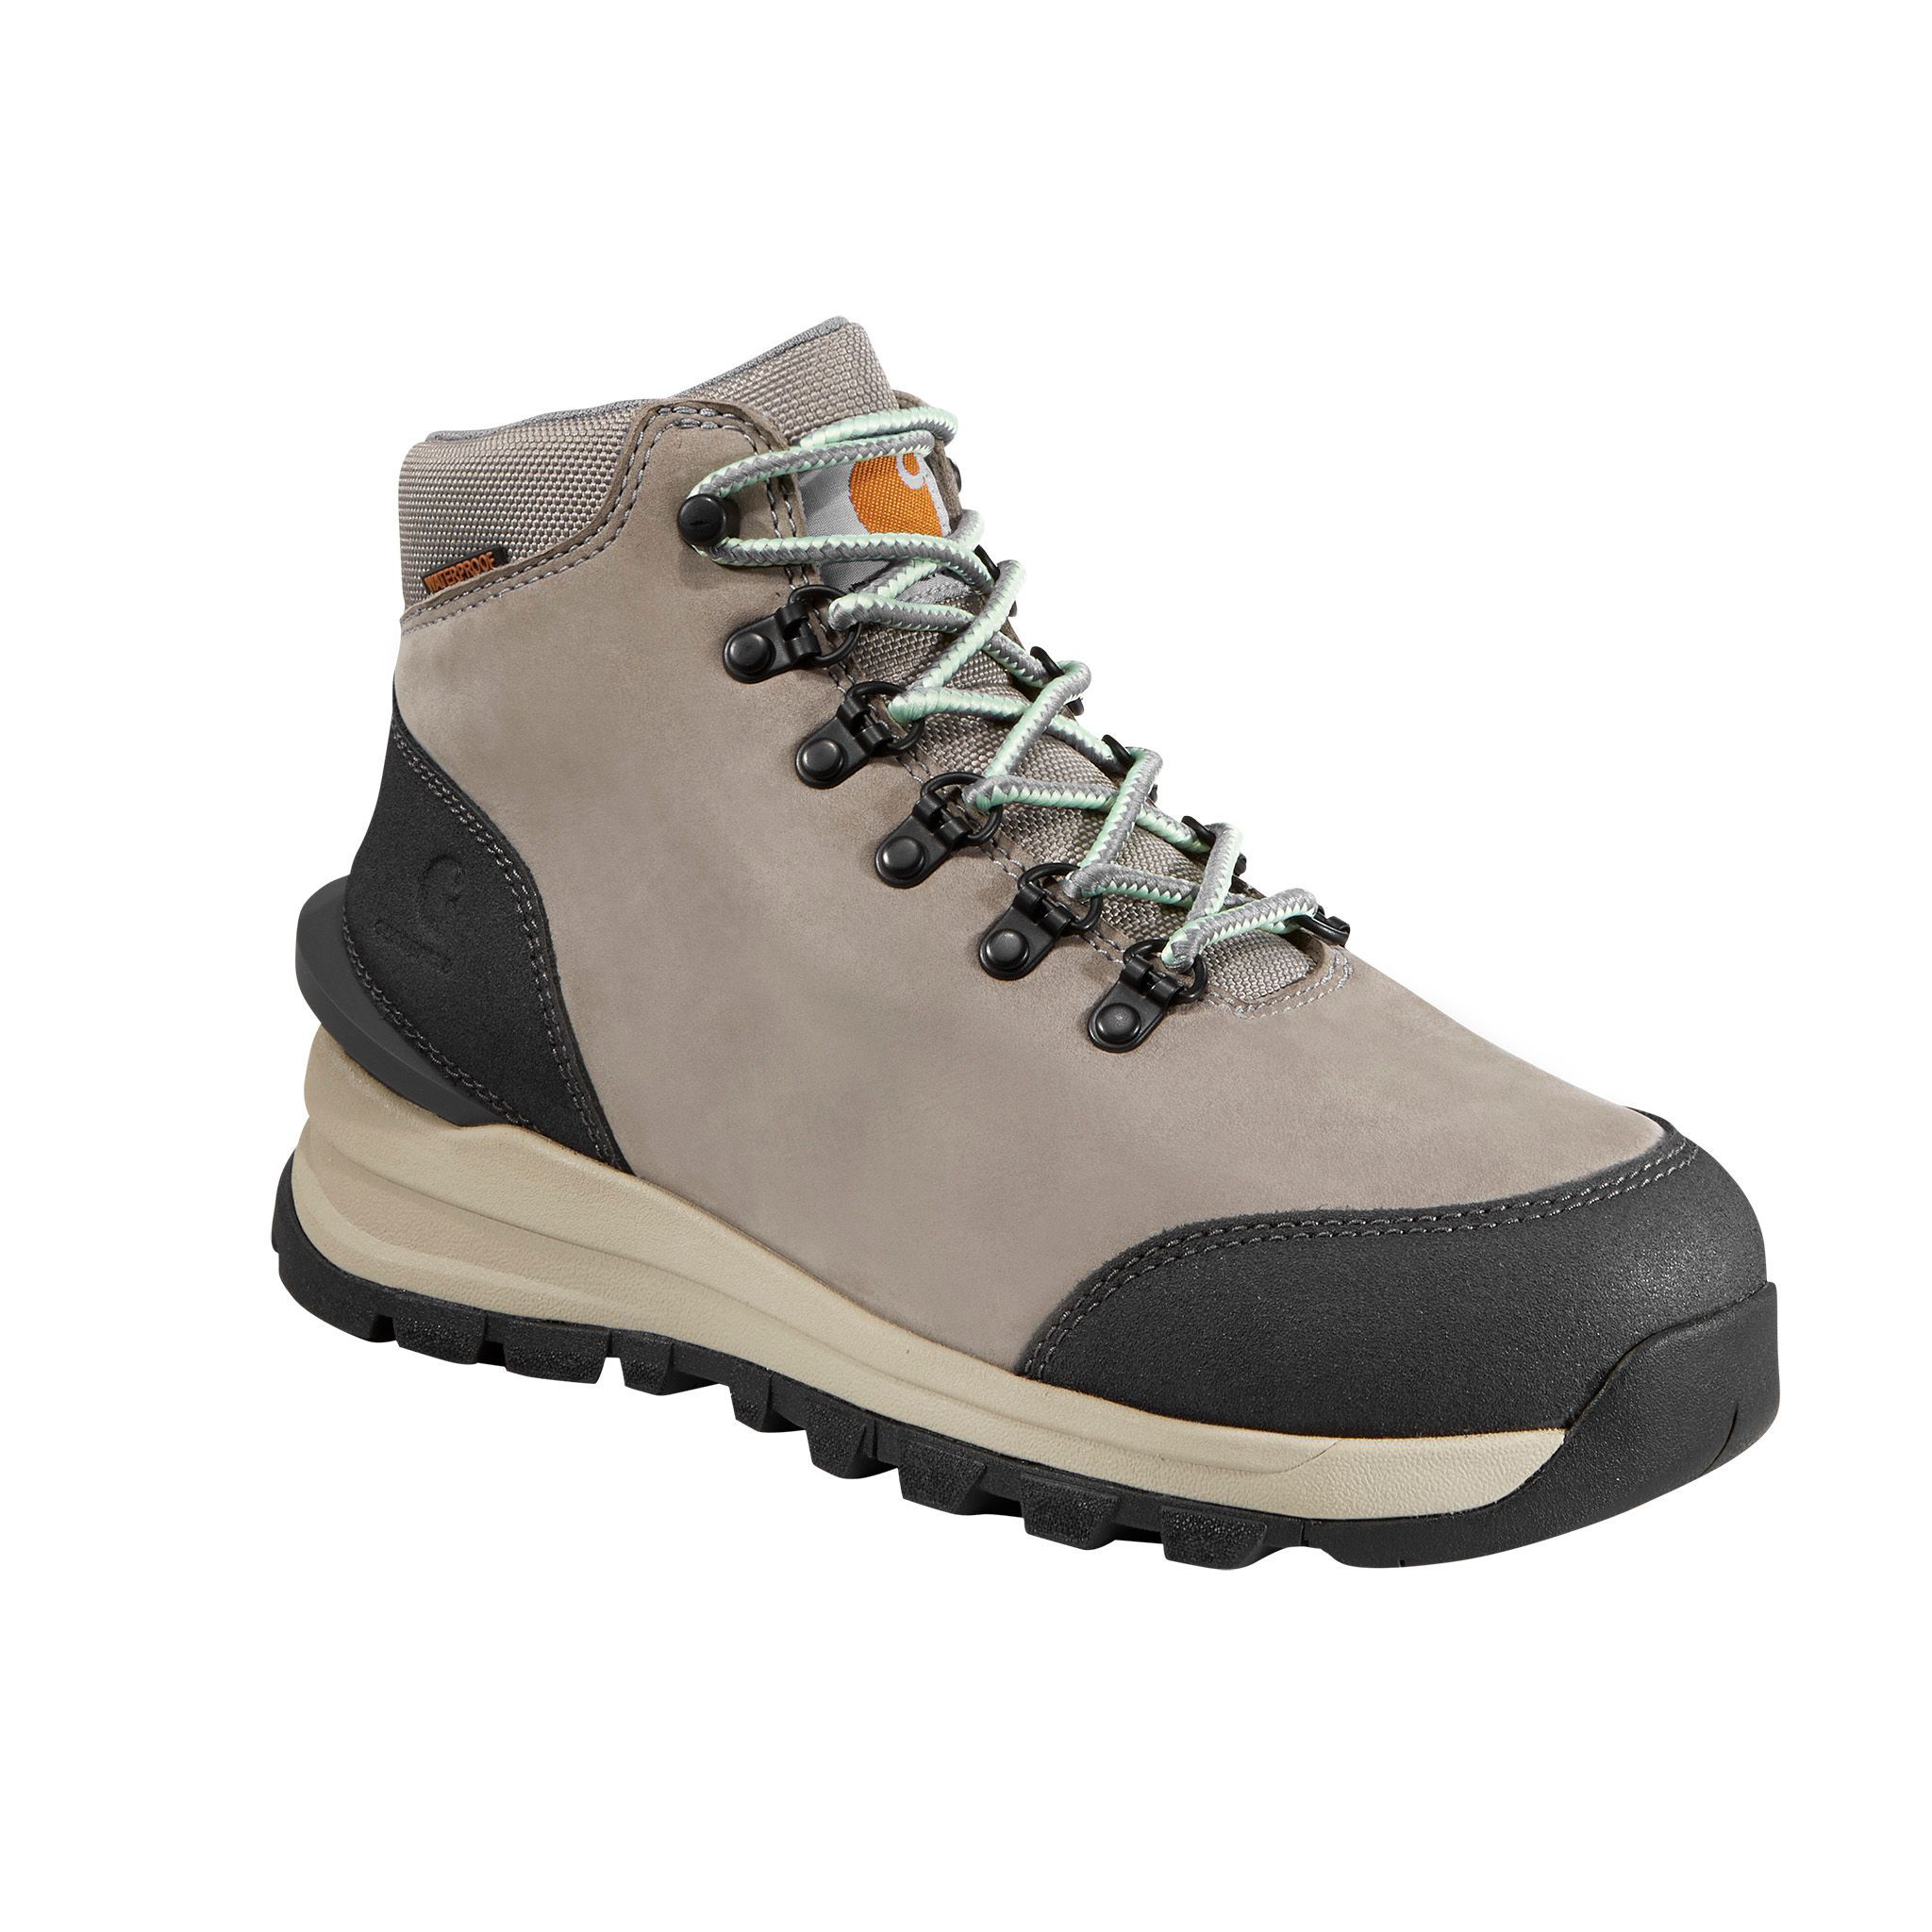 Carhartt Gilmore Waterproof Hiking Boots for Ladies - Grey Nubuck - 11M